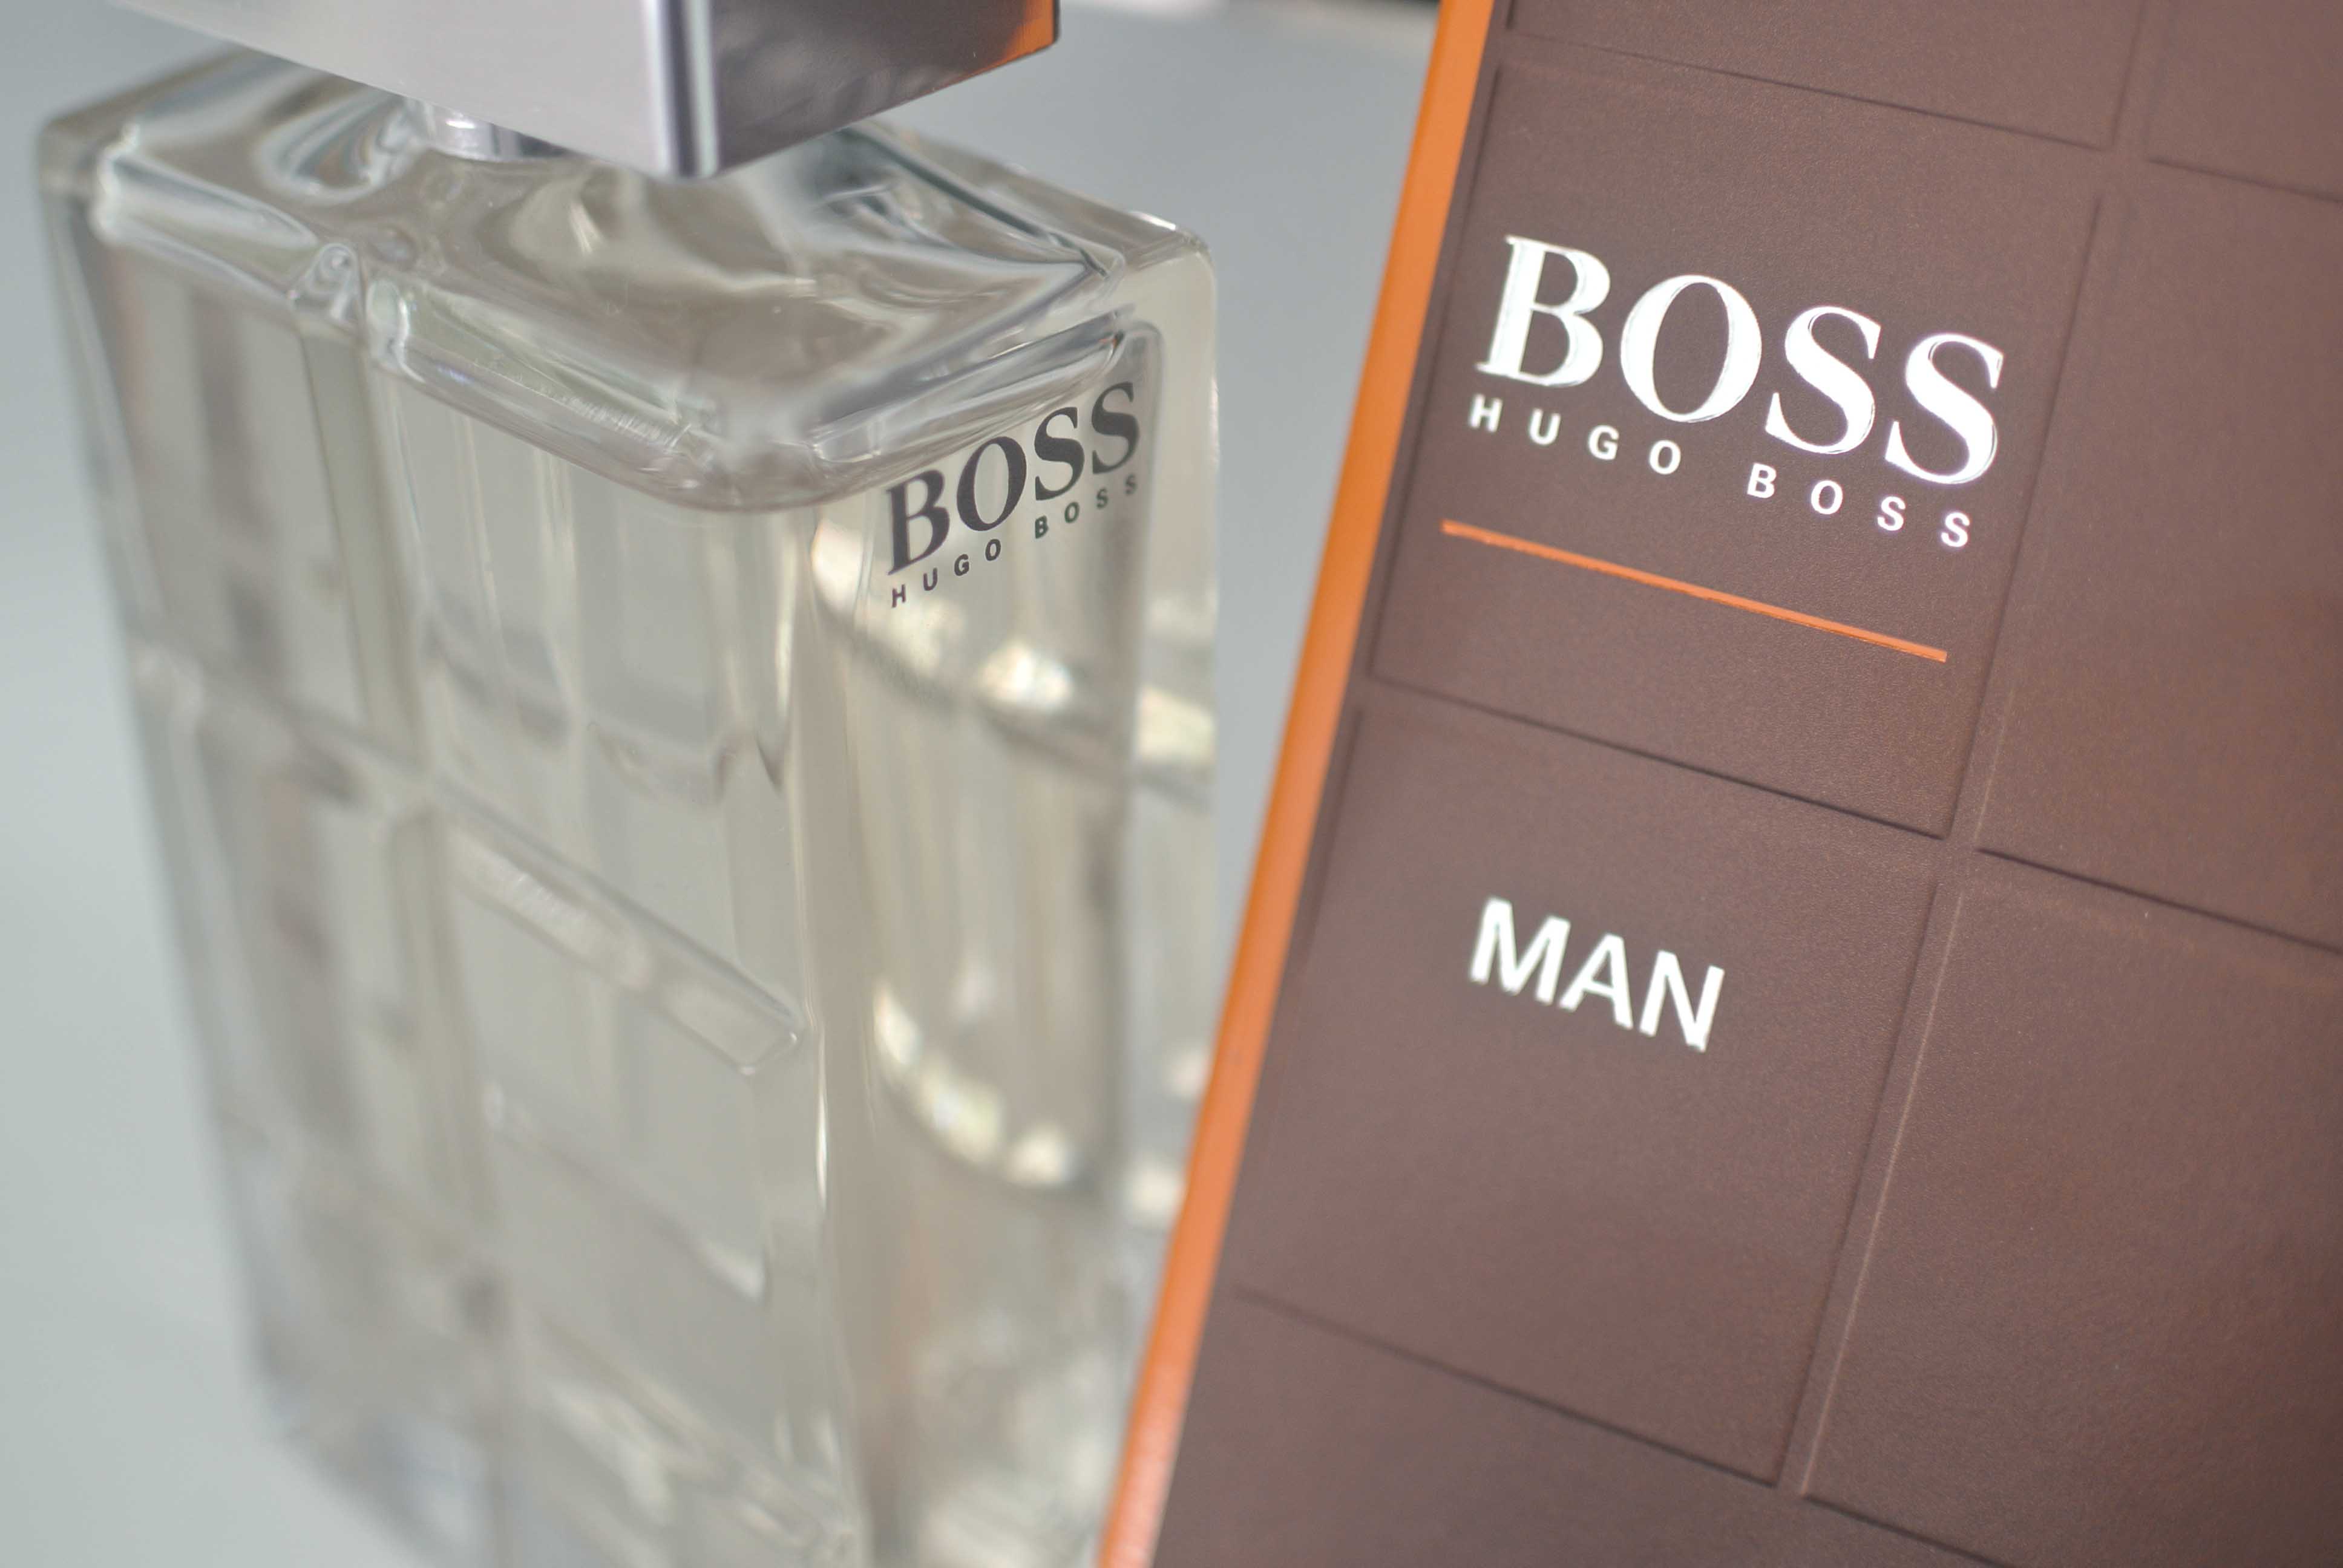 
Hugo Boss Man Box
